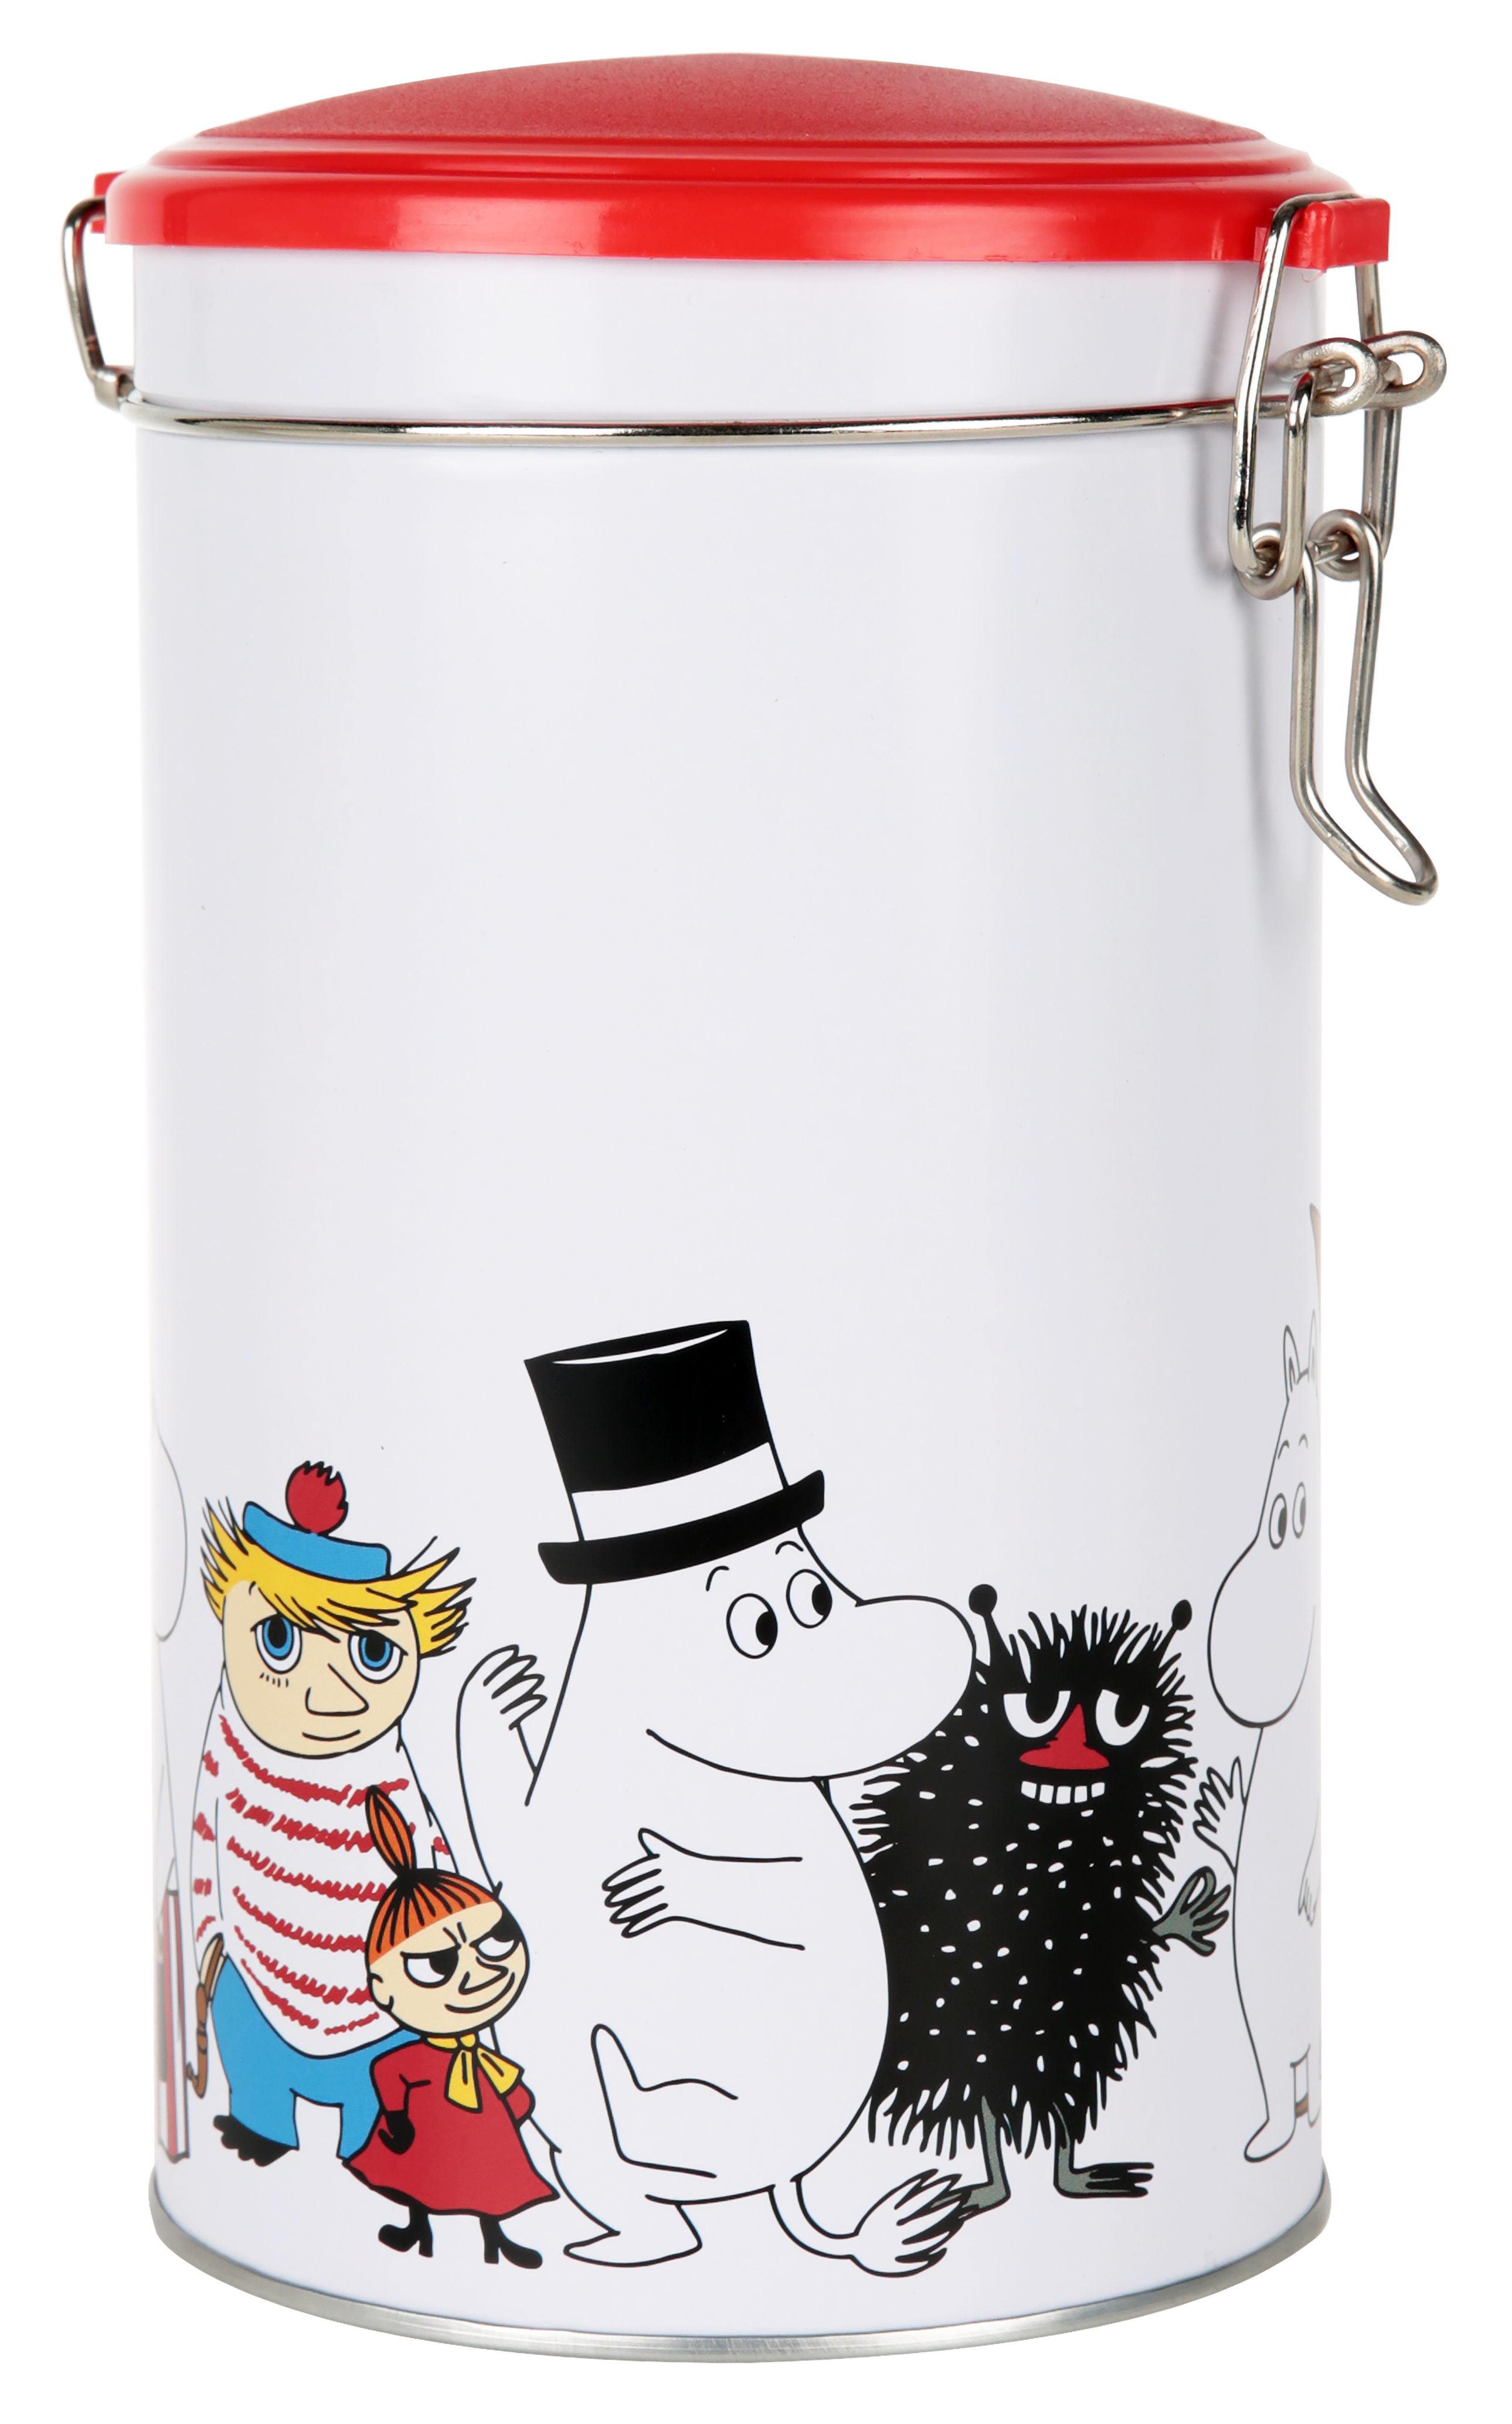 Martinex Moomin Characters Round Coffee Tin